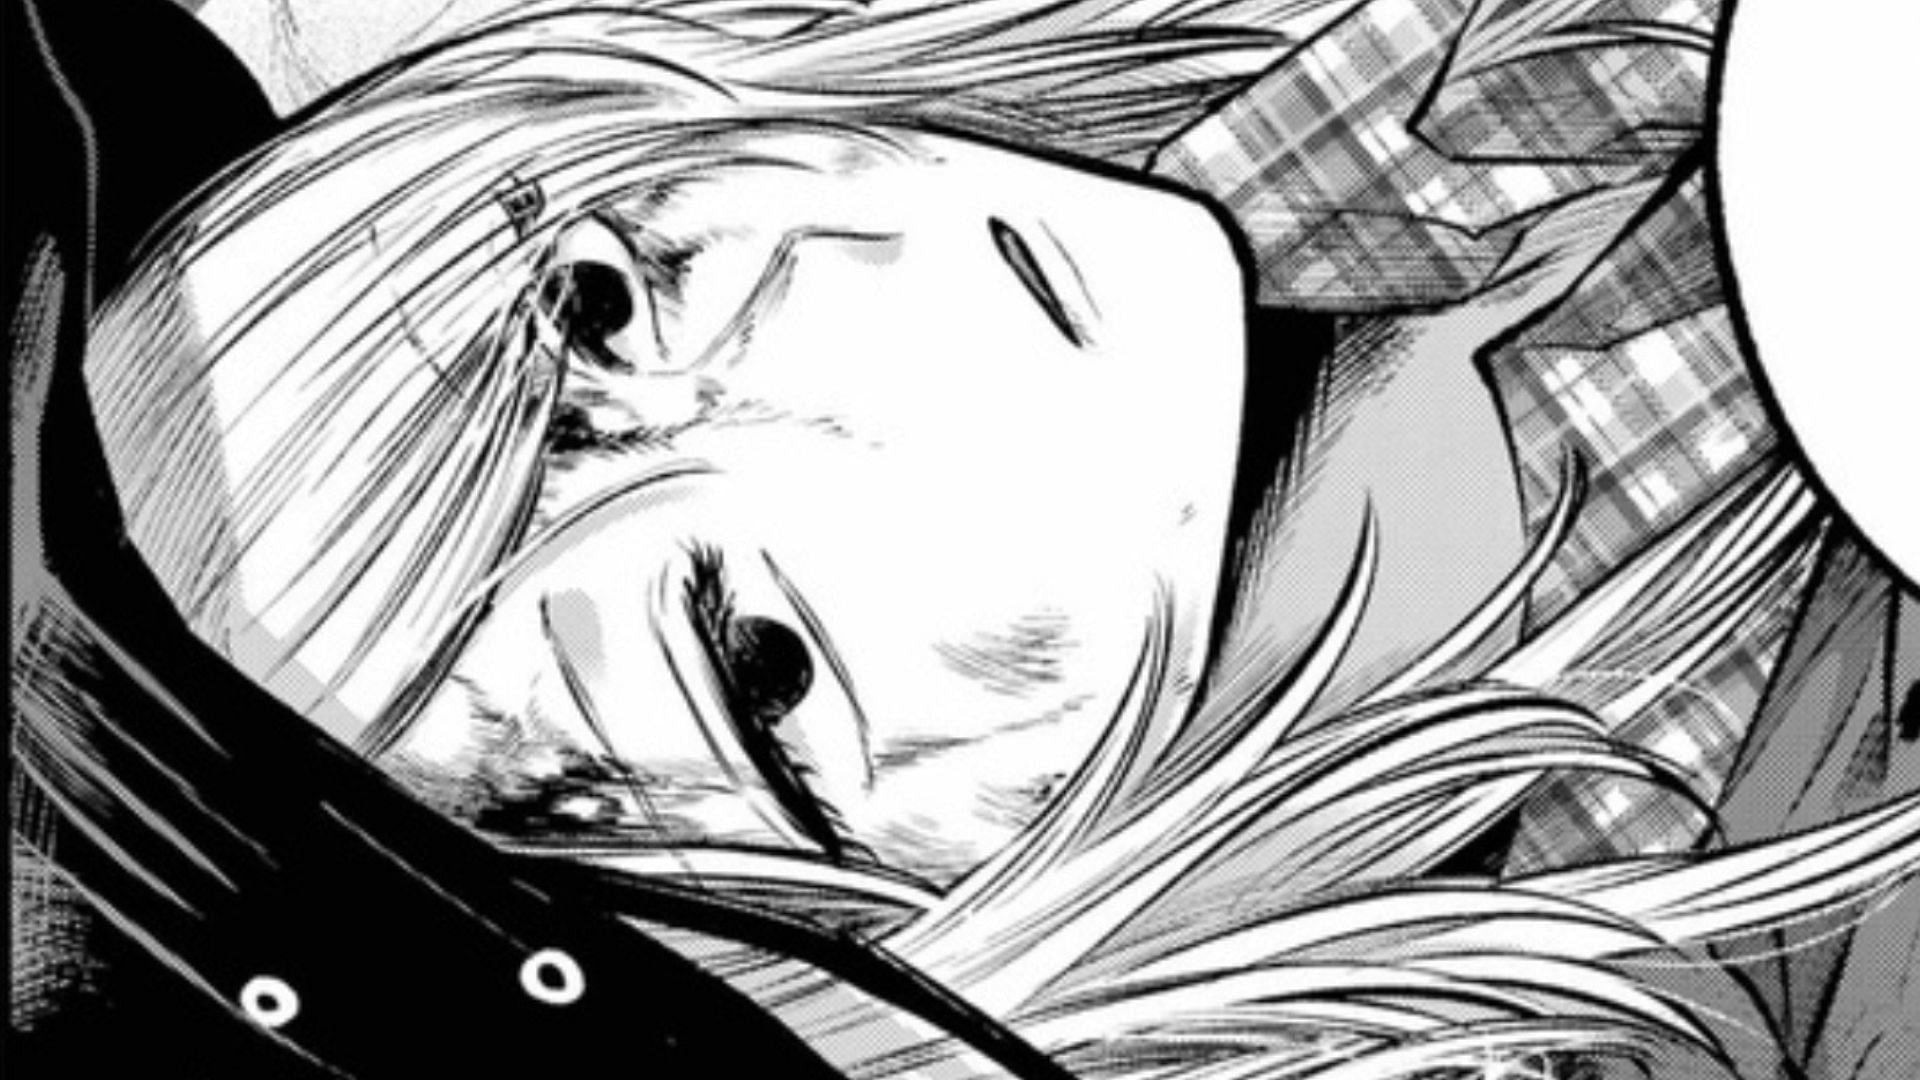 Pop-Star Murder Mystery Manga Oshi no Ko To Finally Receive Anime